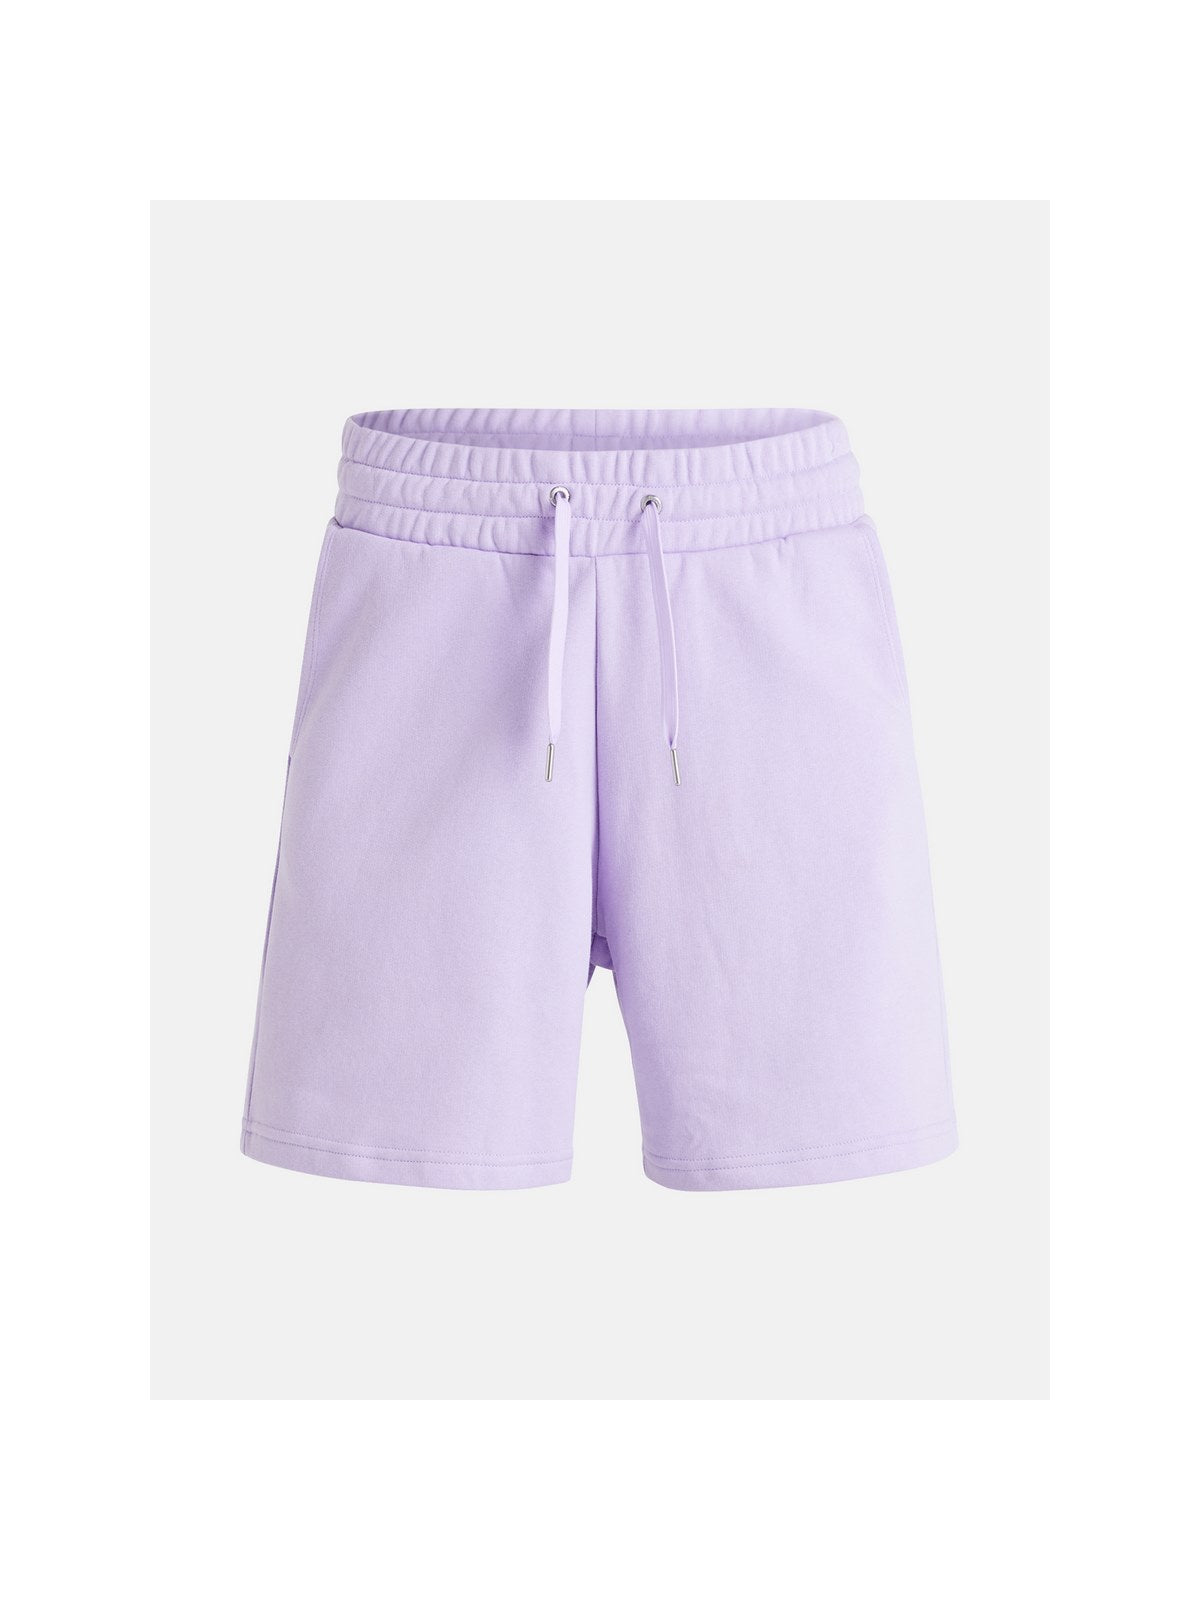 Szorty Peak Performance W Ease Shorts - lila pastelowy